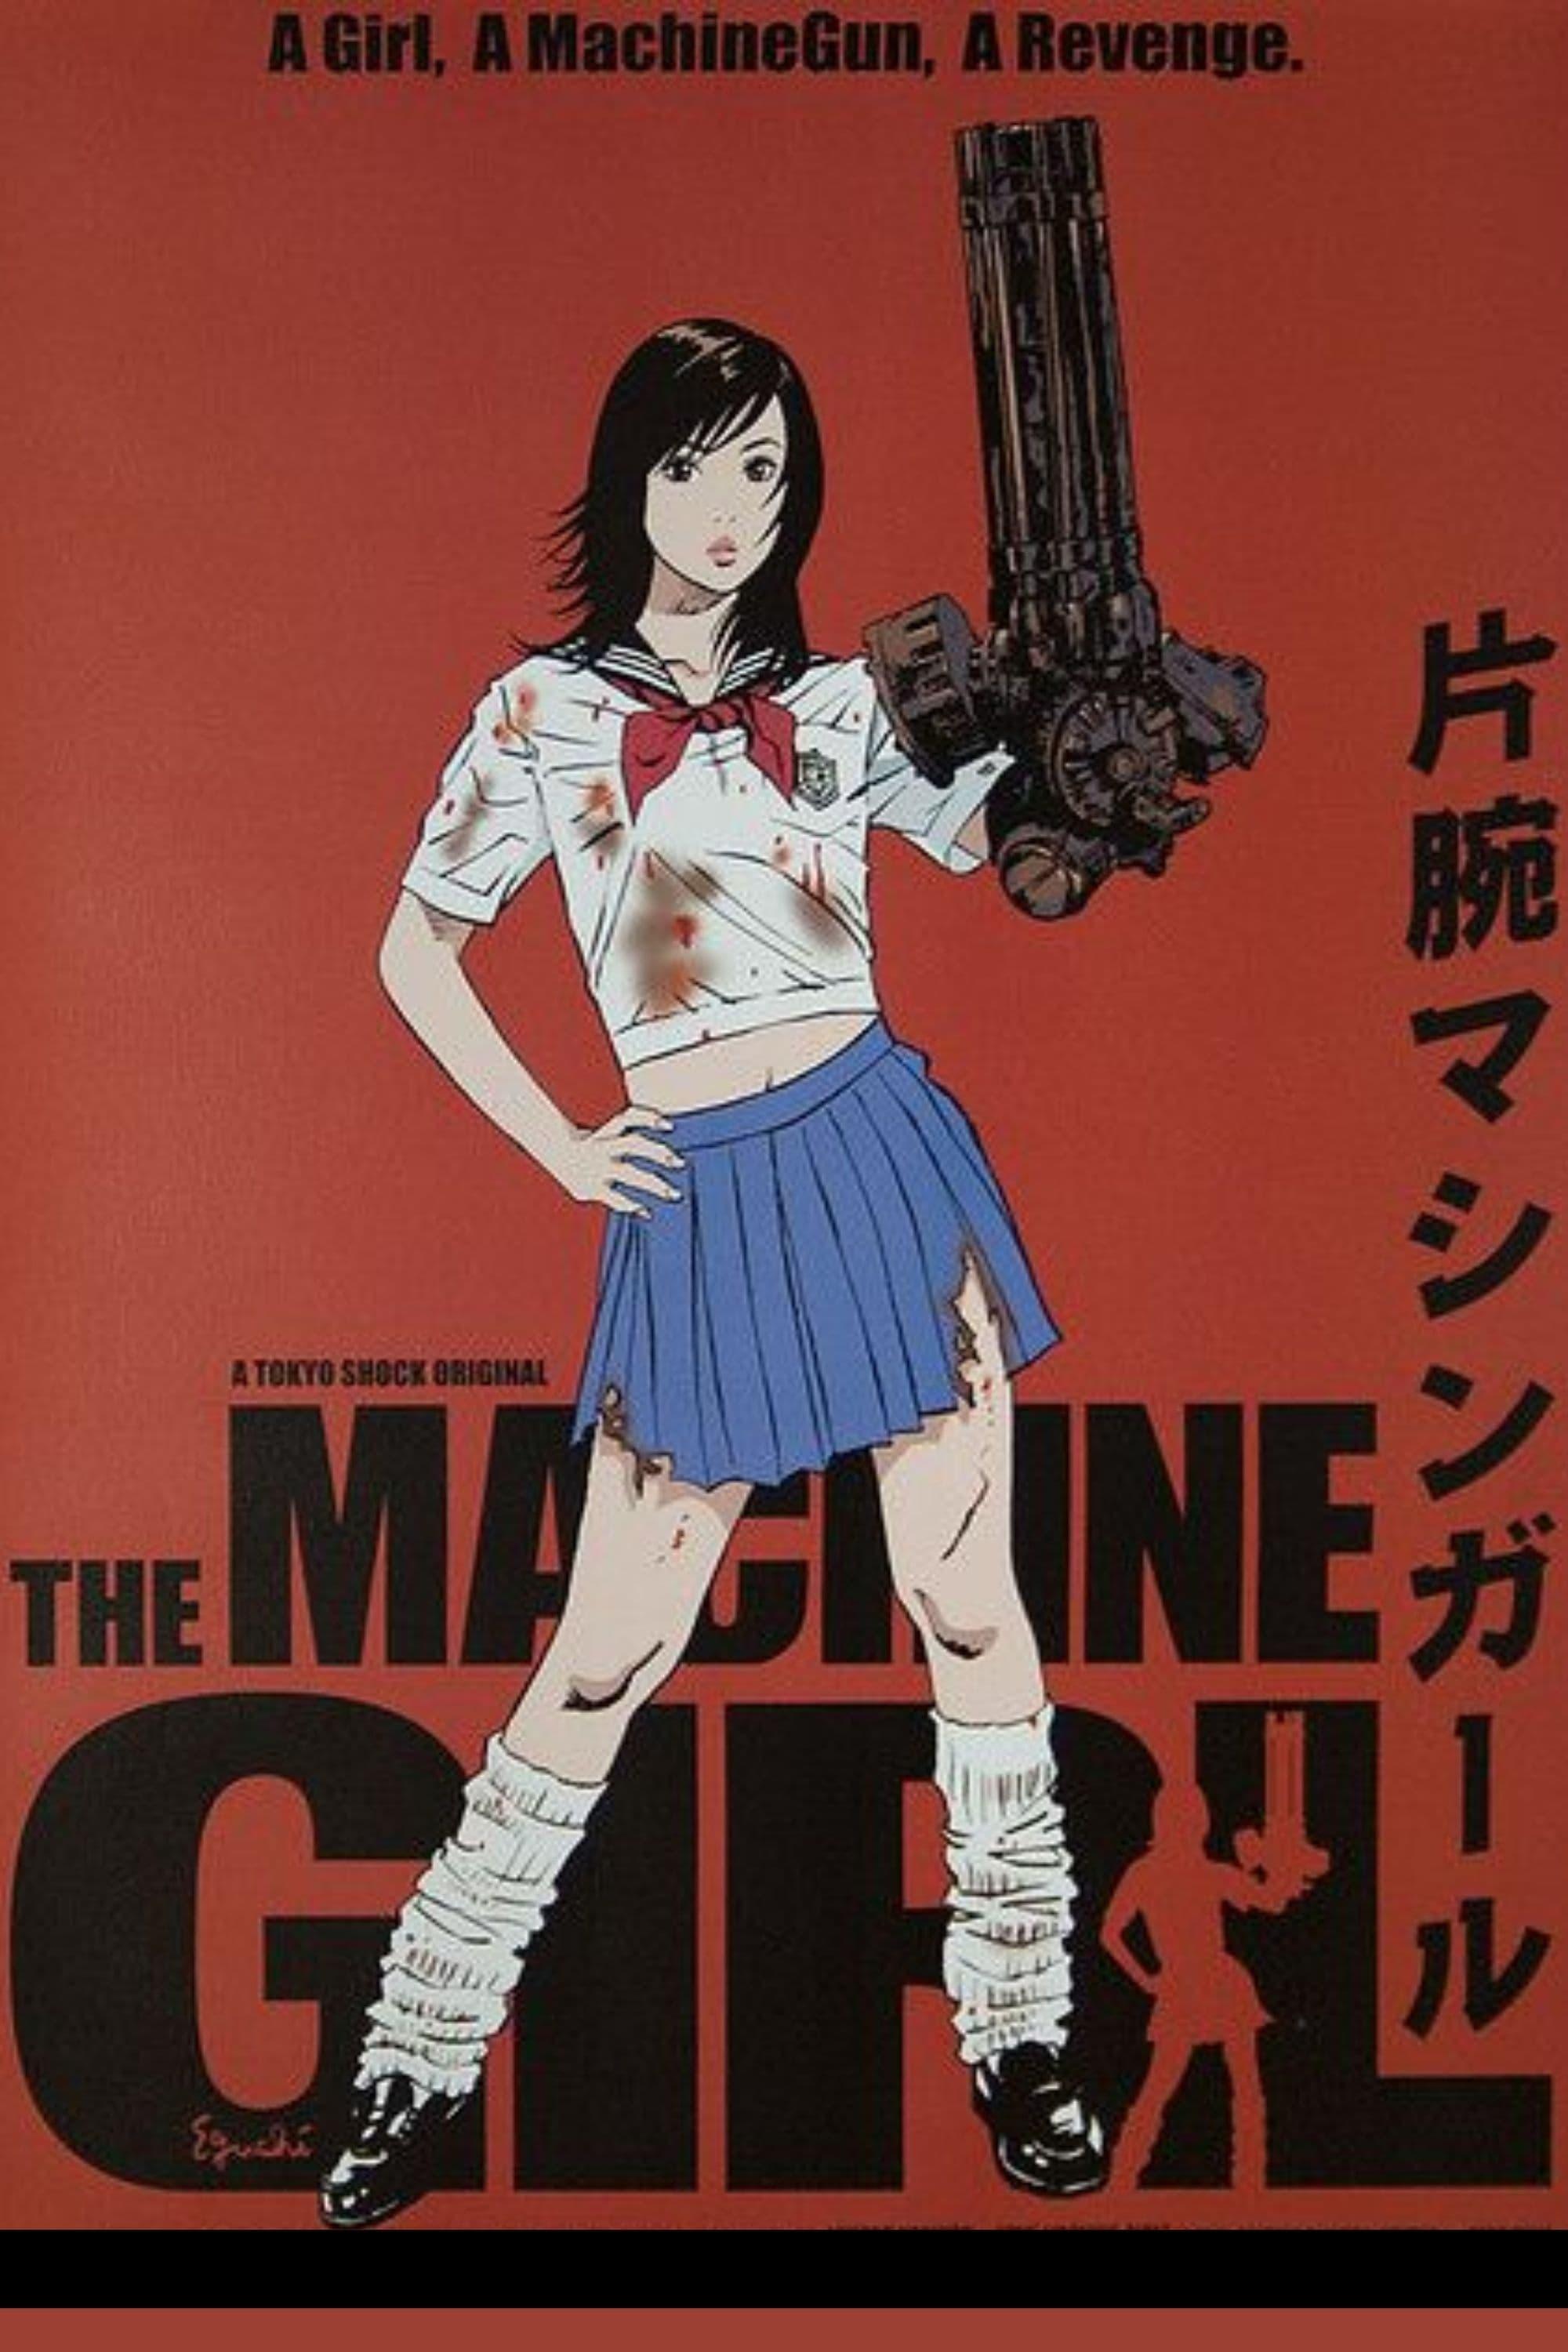 The Machine Girl poster